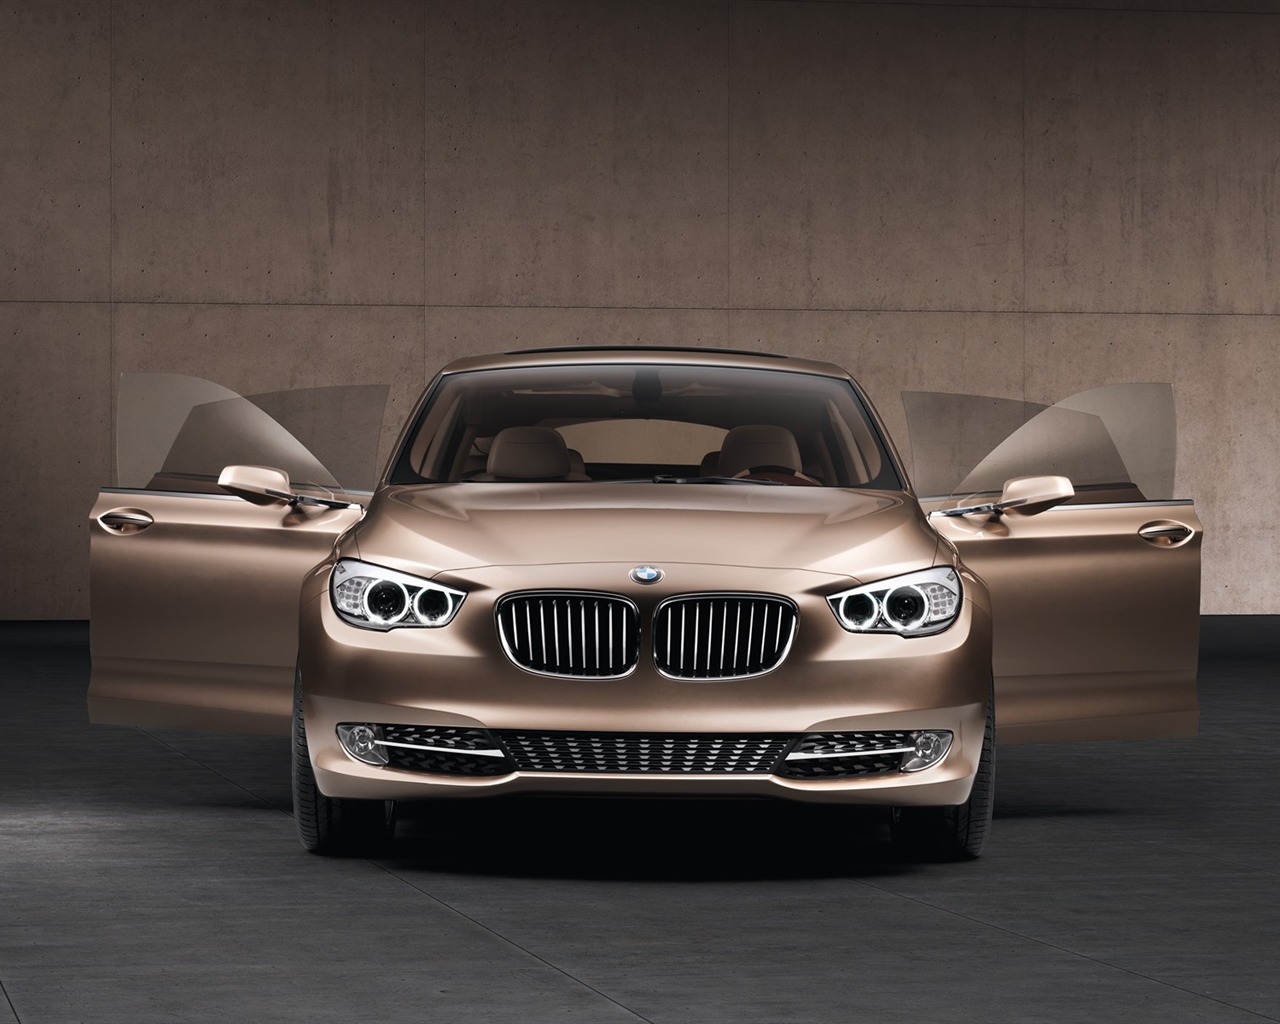 Fond d'écran BMW concept-car (1) #19 - 1280x1024